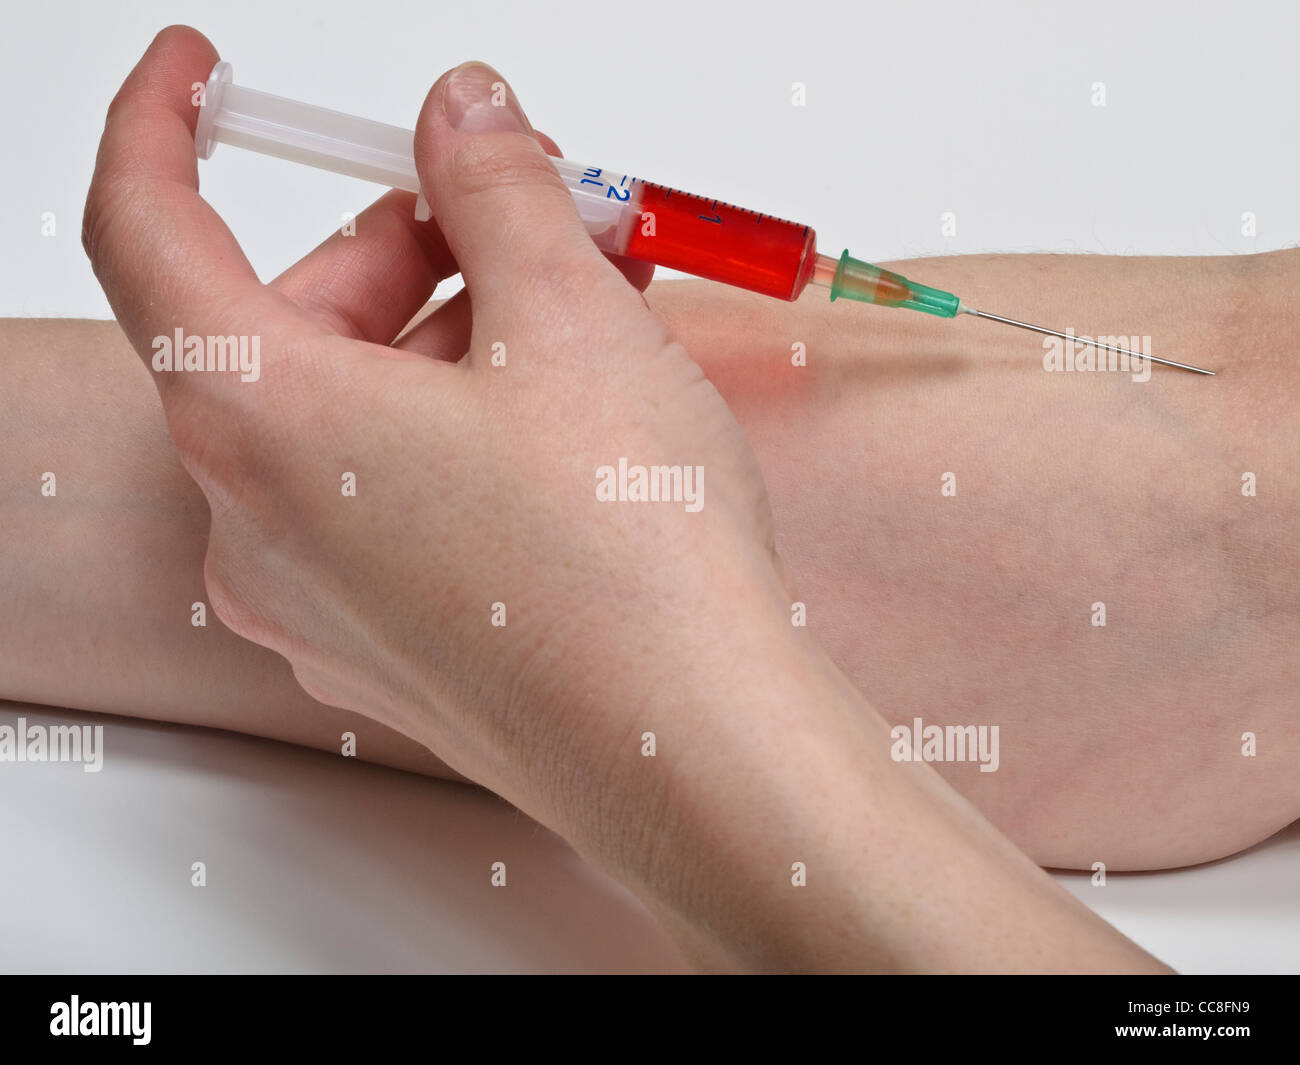 Eine Spritze mit roter Flüssigkeit wird in den Arm gespritzt | une seringue d'un liquide rouge est injecté dans le bras Banque D'Images